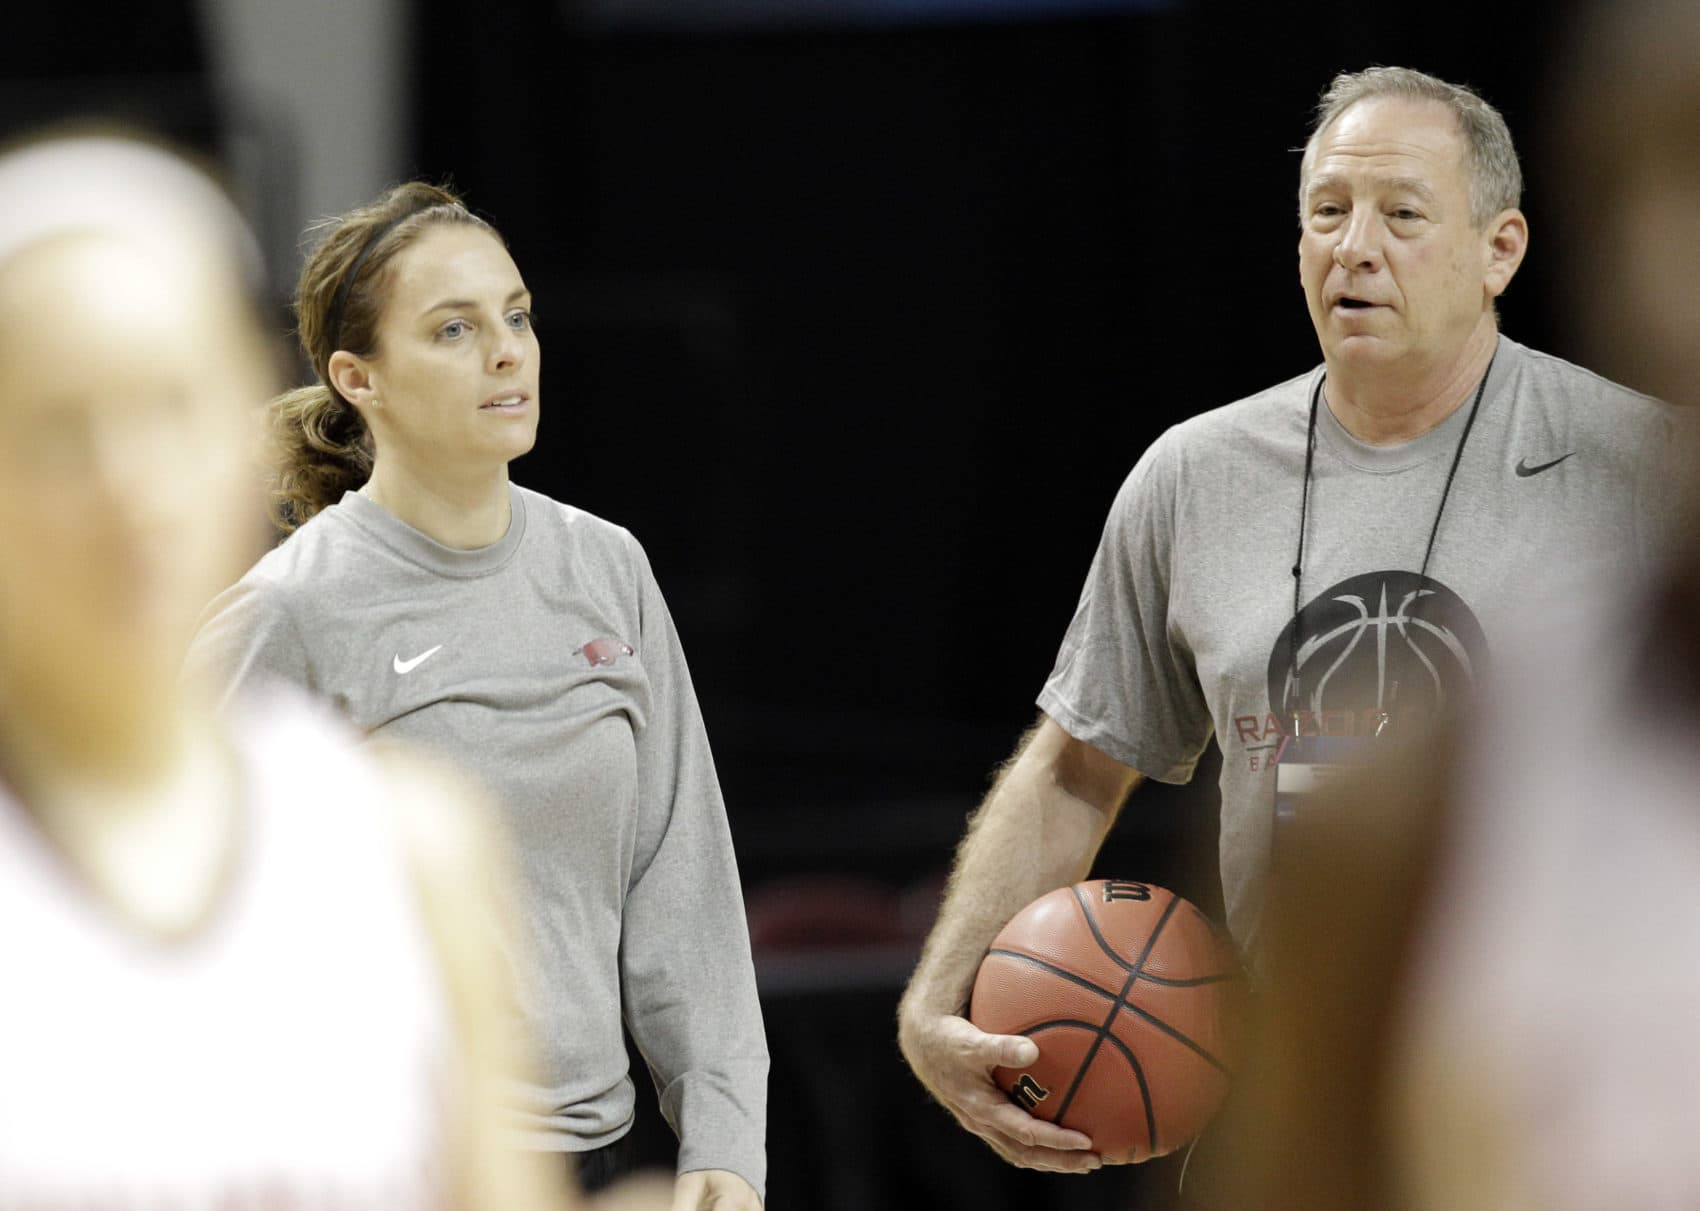 Tom and Nicki coached together at the University of Arkansas until 2014. (AP Photo/David J. Phillip)